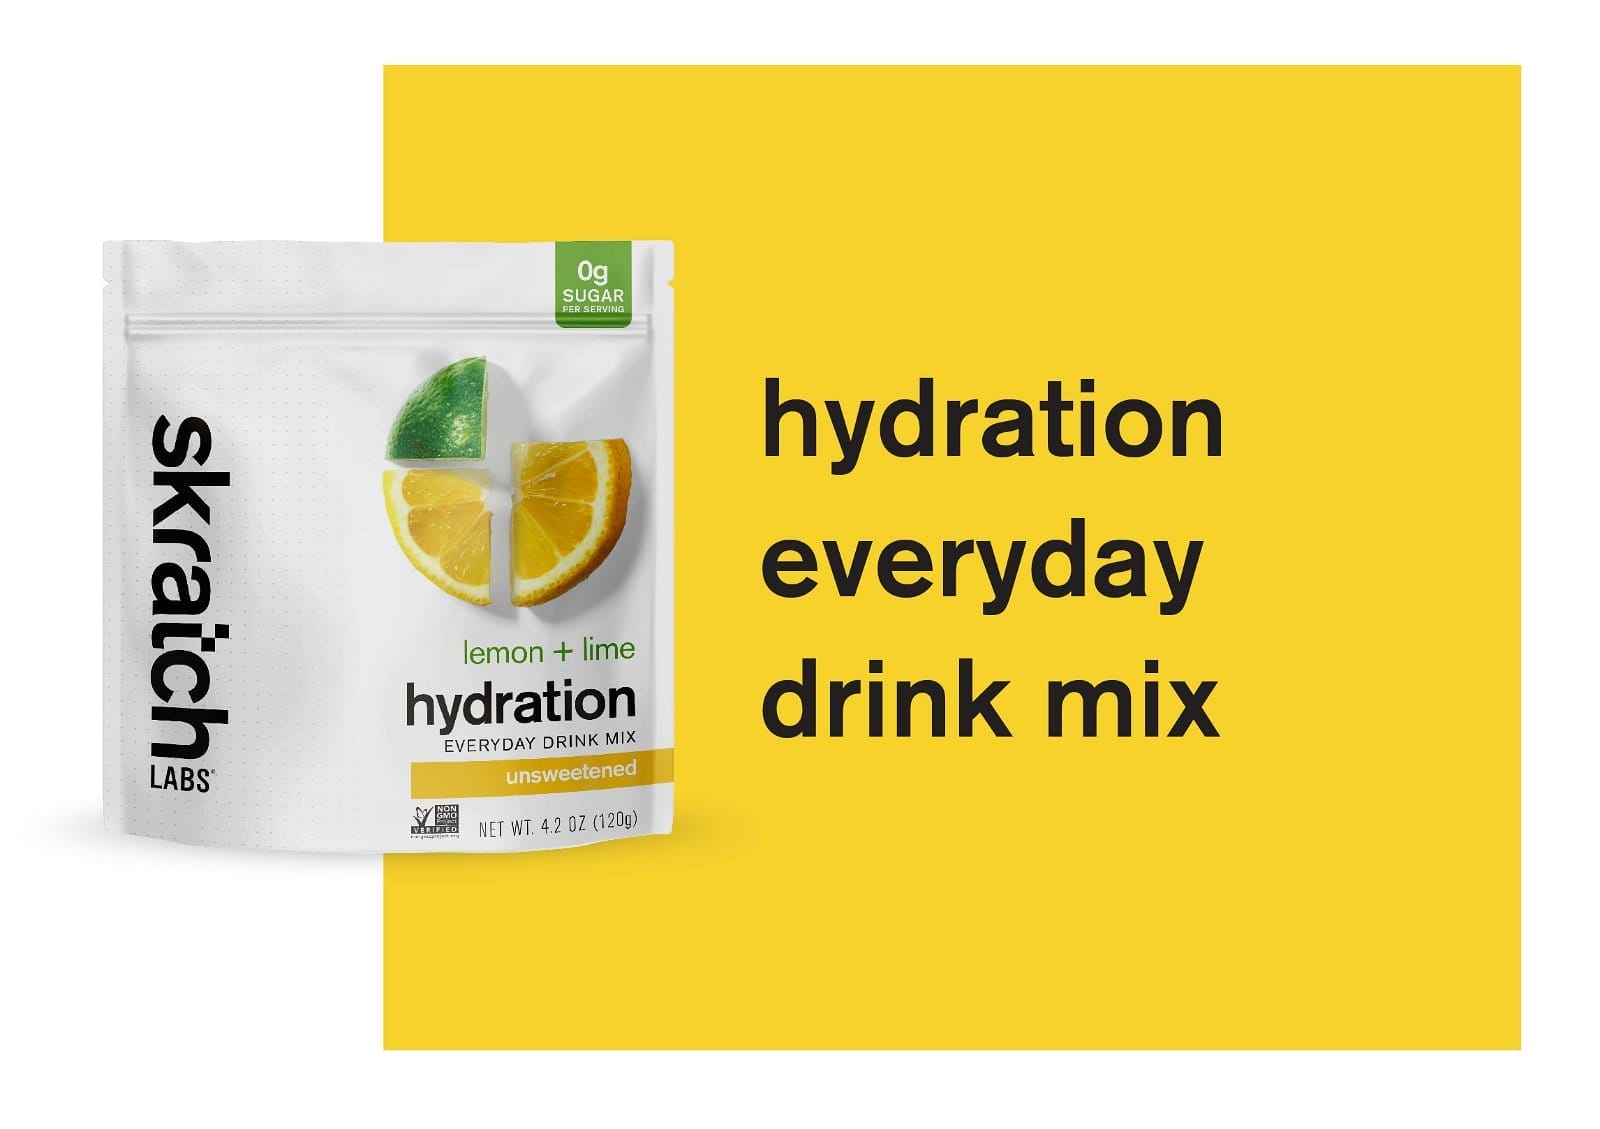 hydration everyday drink mix